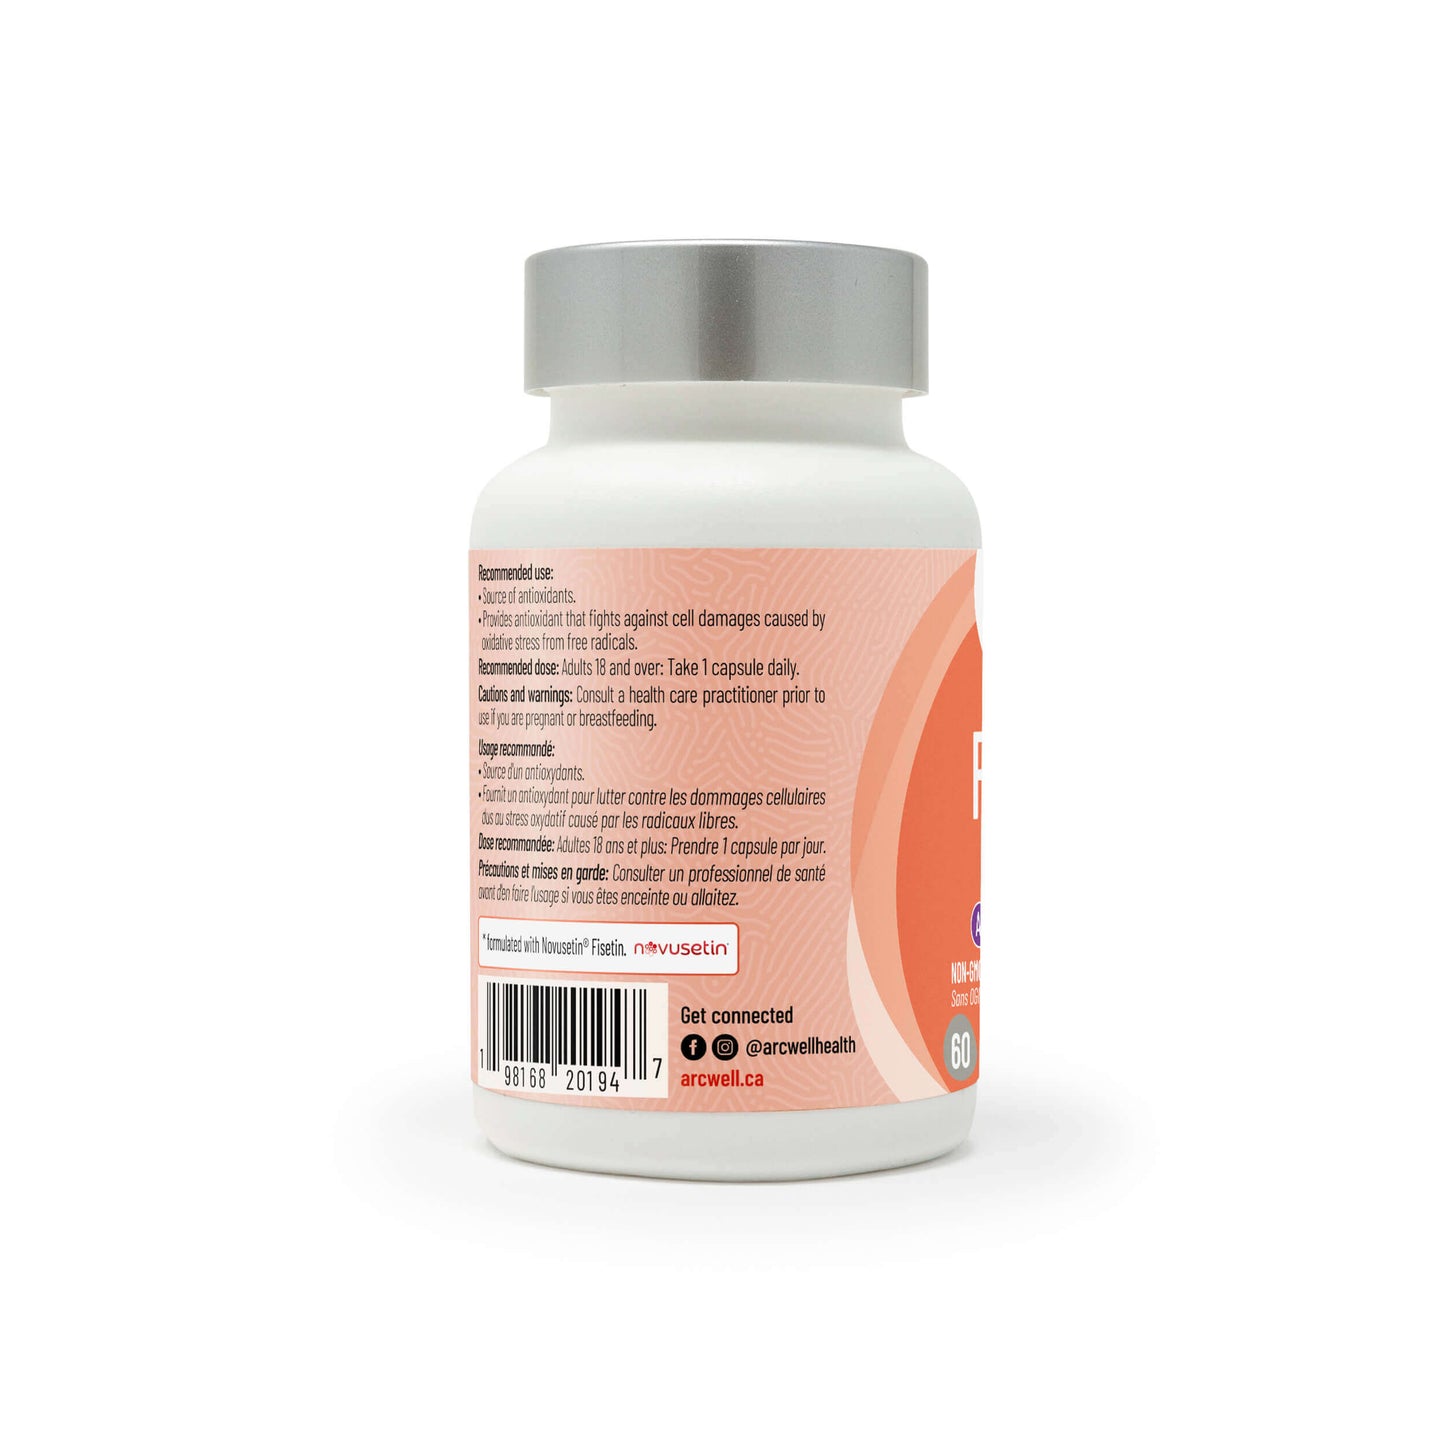  Arcwell fisetin, 100 mg, antioxidant, 60 vegetable capsules